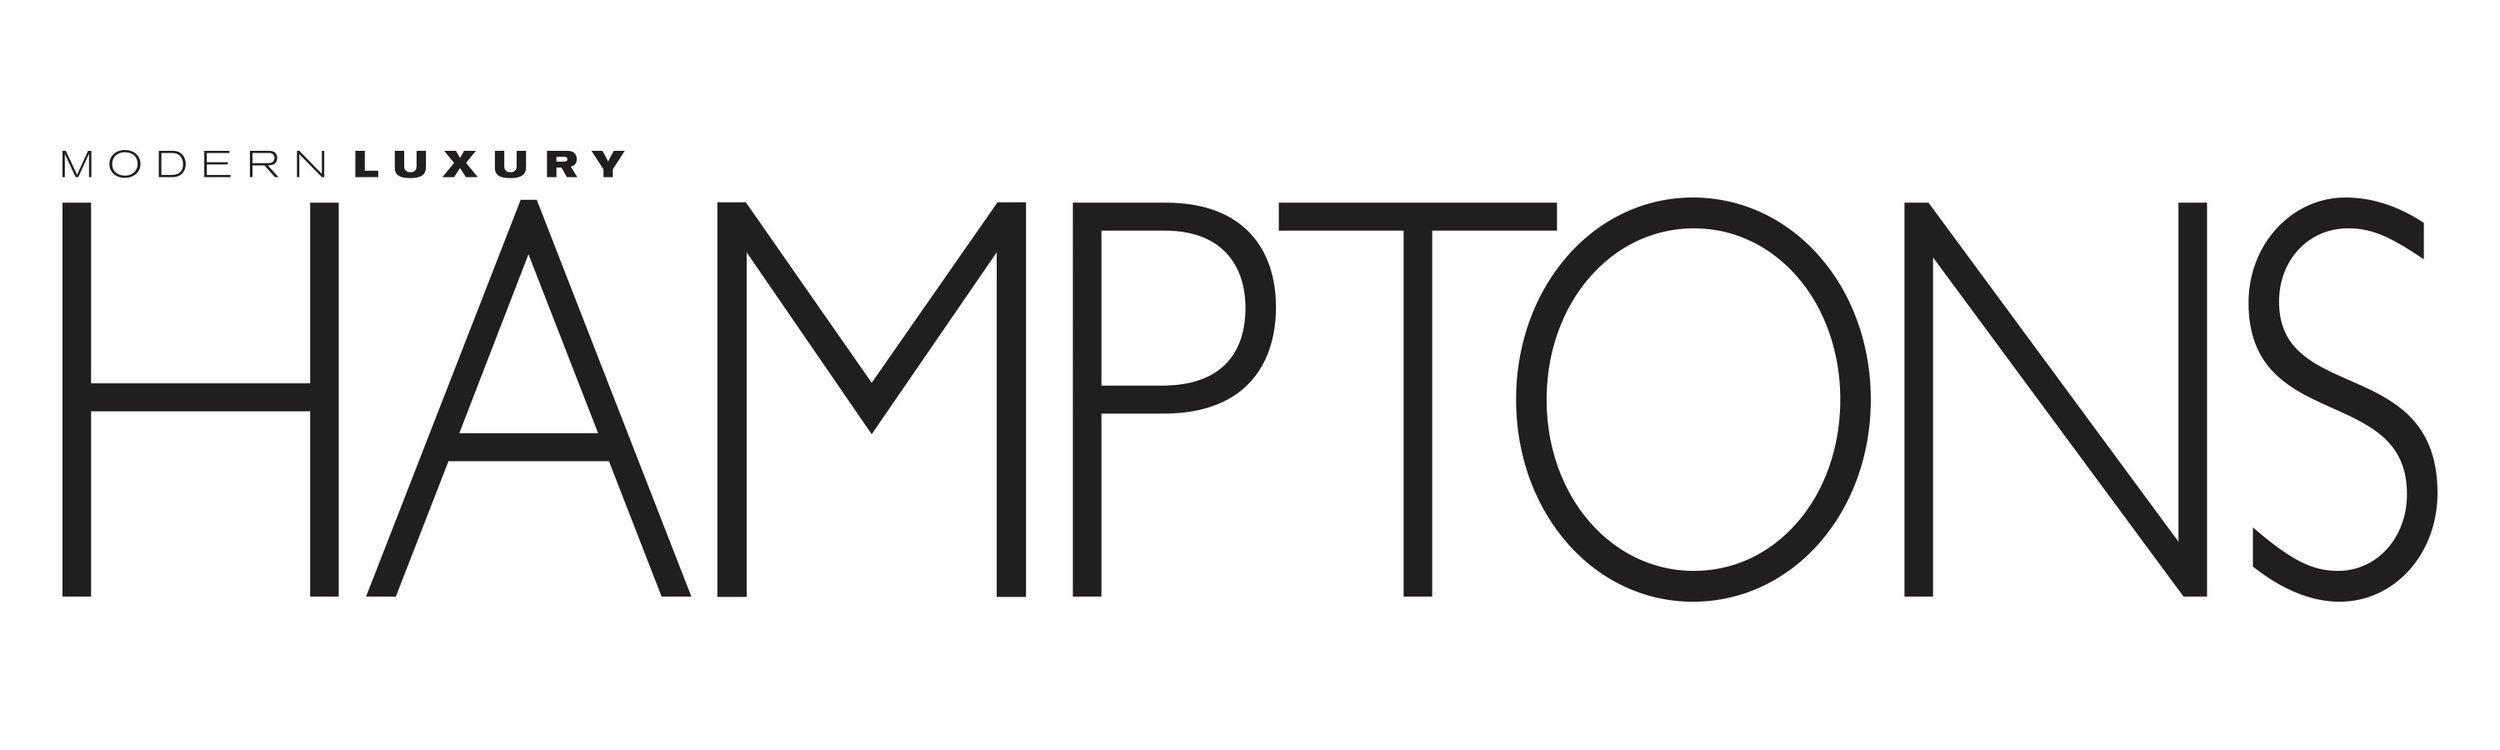 Hamptons_Logo.jpg